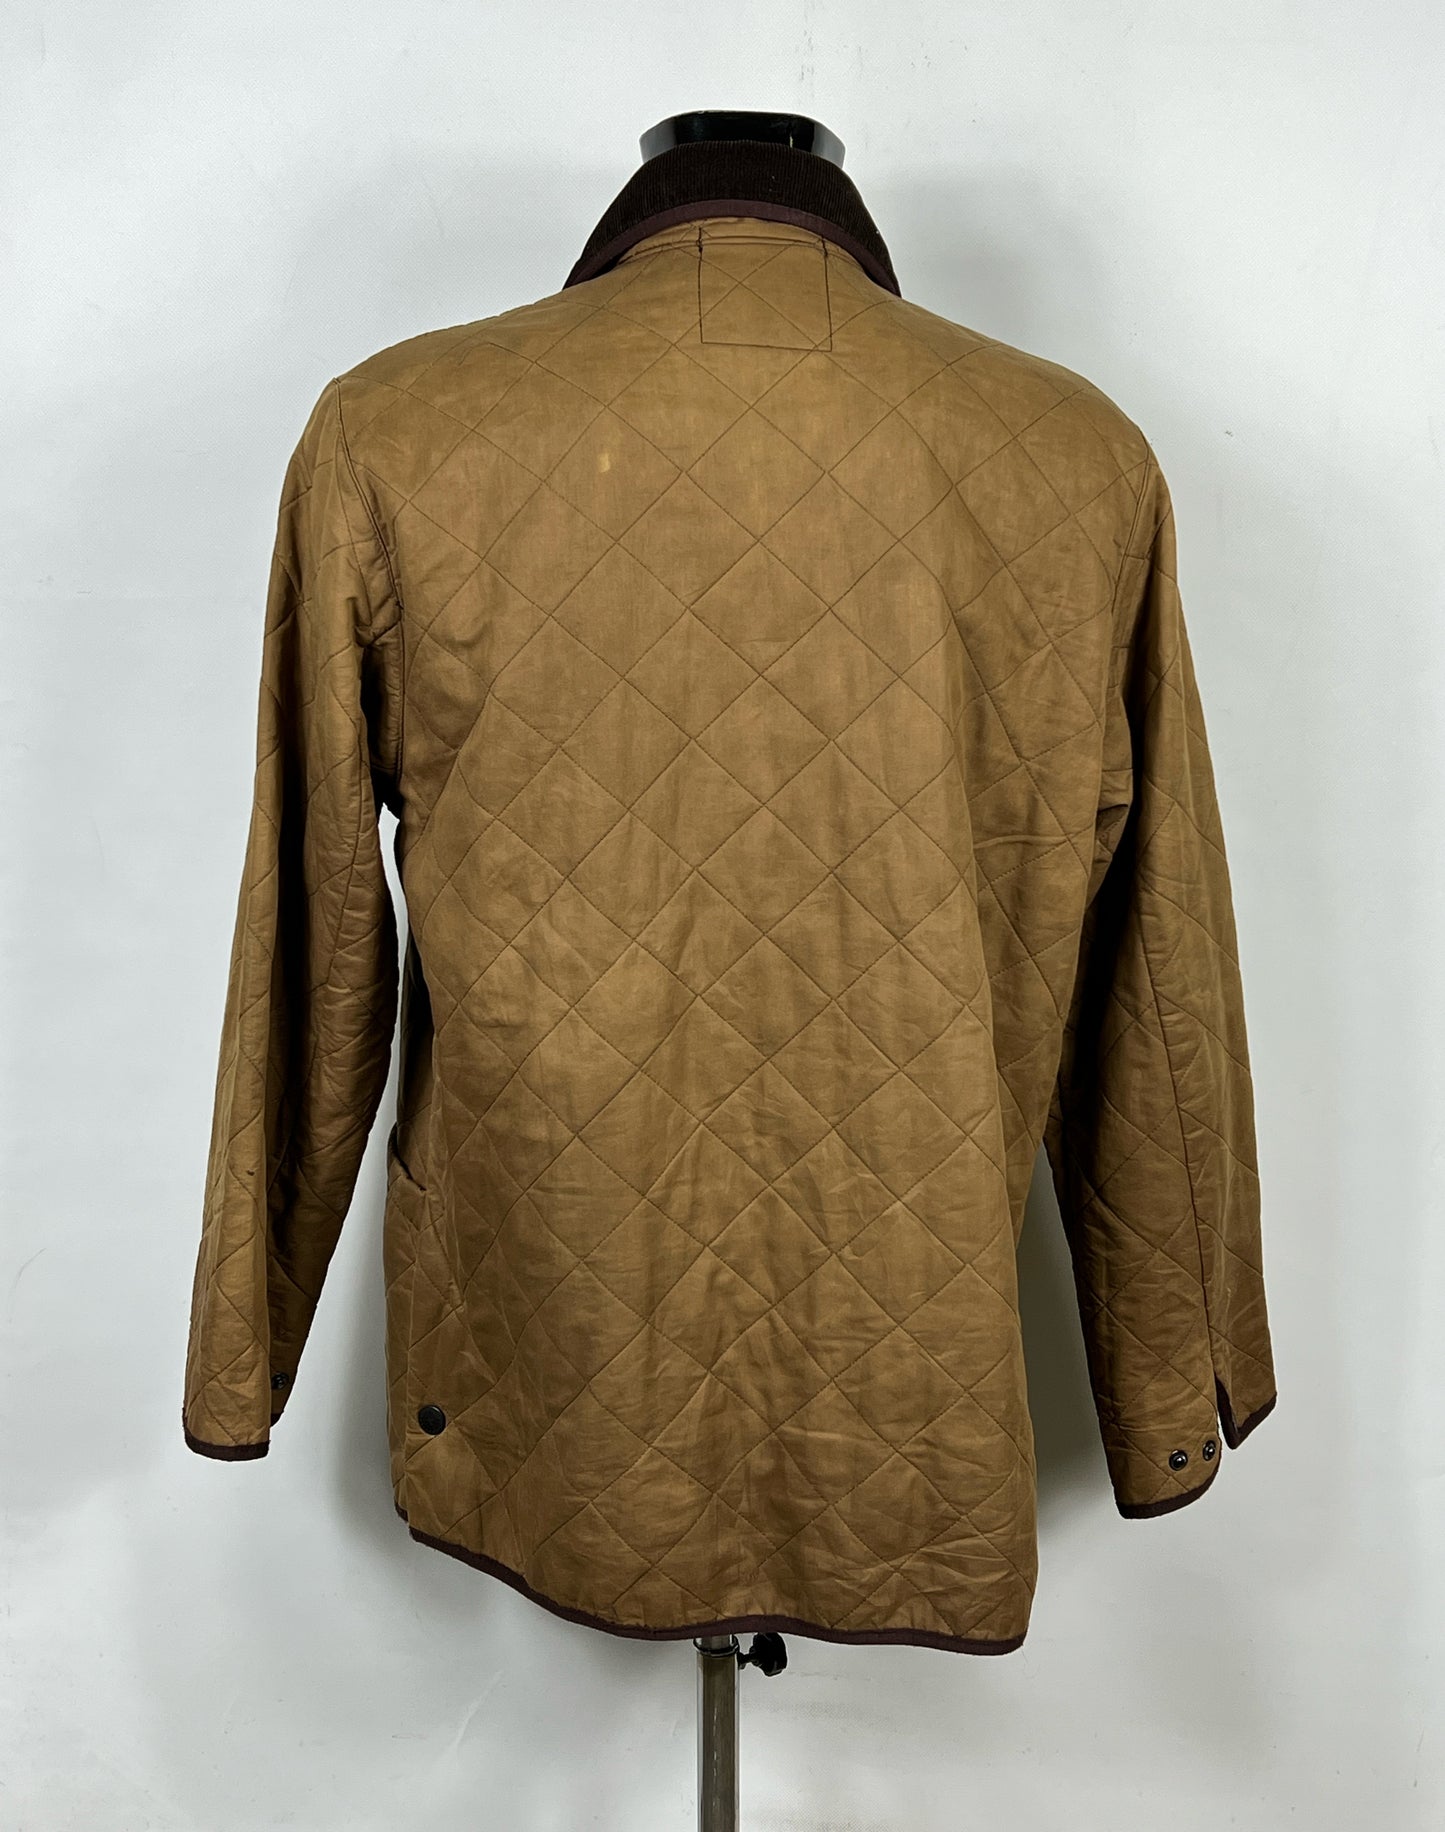 Giacca Barbour Uomo Duracotton Marrone Large - Beige Duracotton jacket Size L